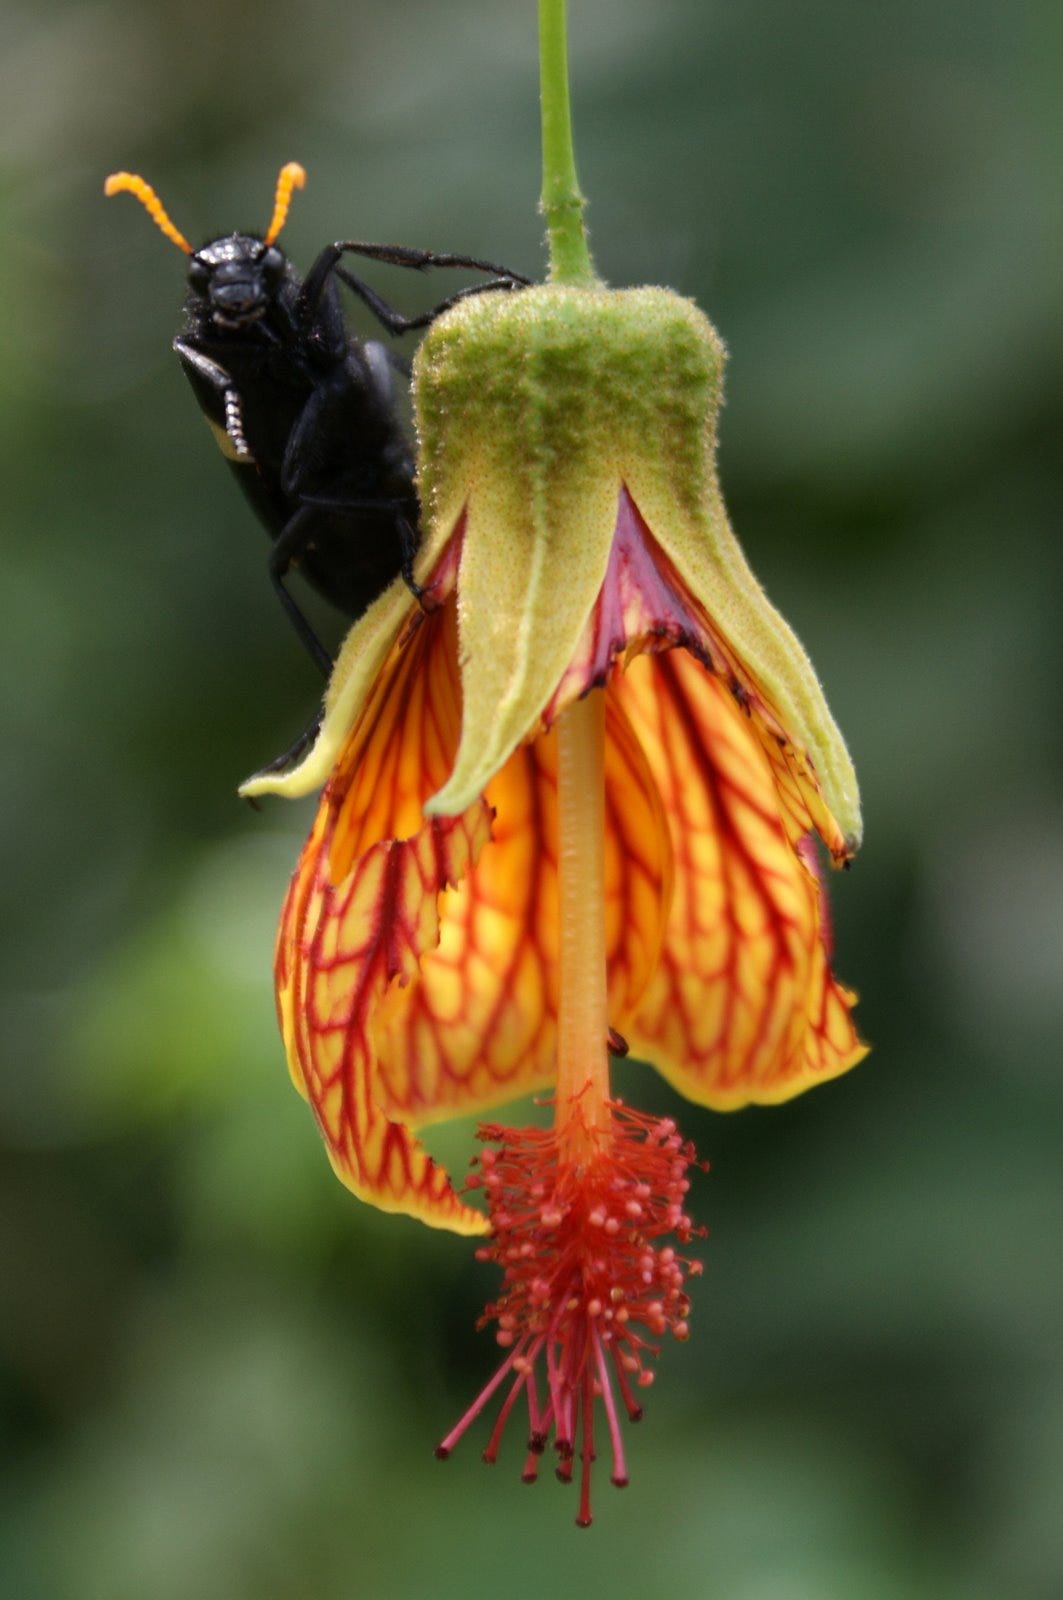 A Hycleus Blister Beetle perched atop an Abutilon Striatum flower.